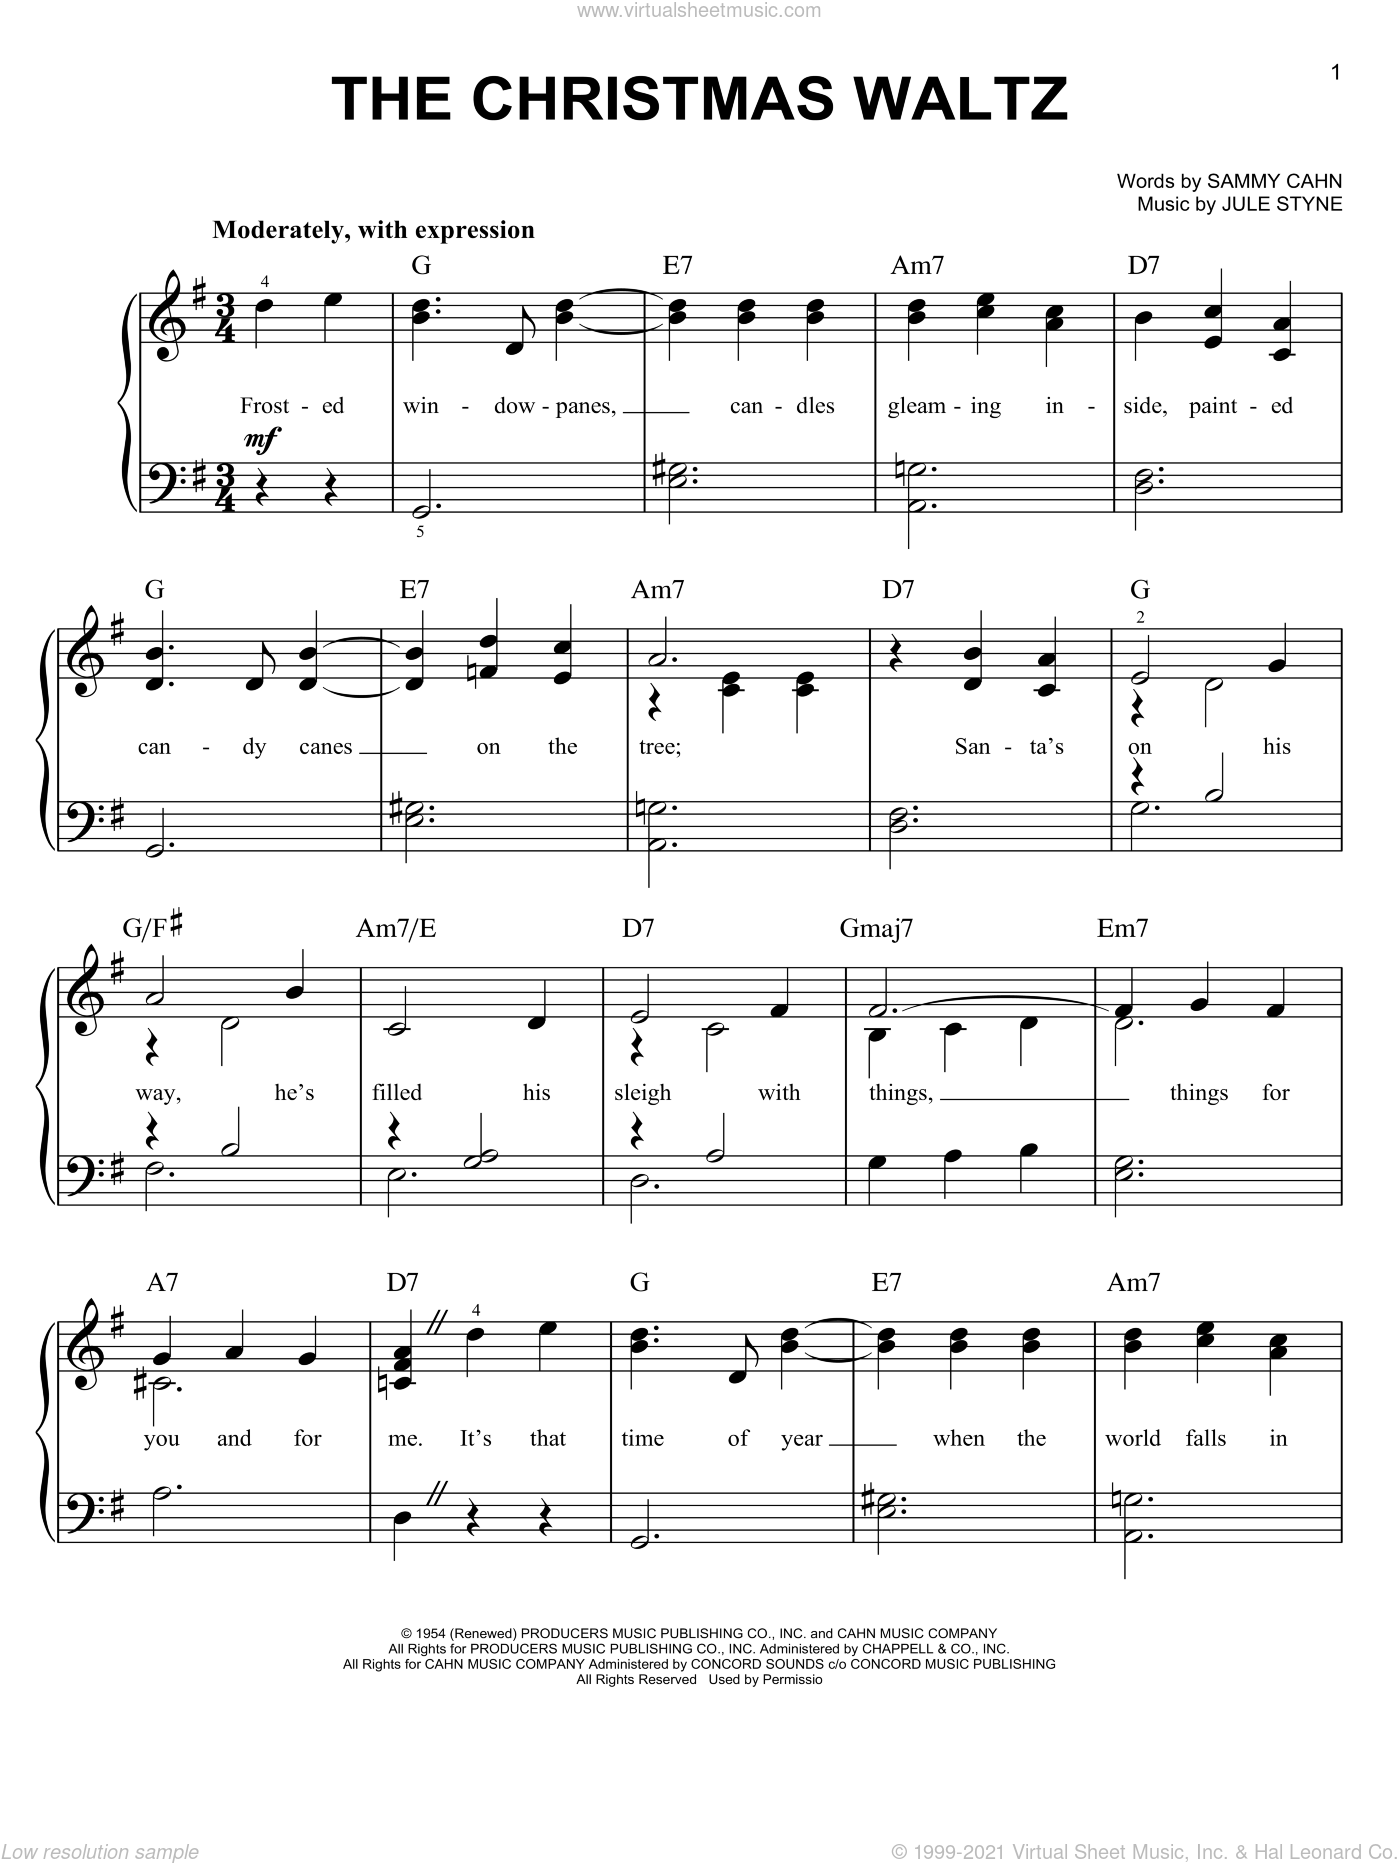 Sinatra - The Christmas Waltz sheet music for piano solo PDF